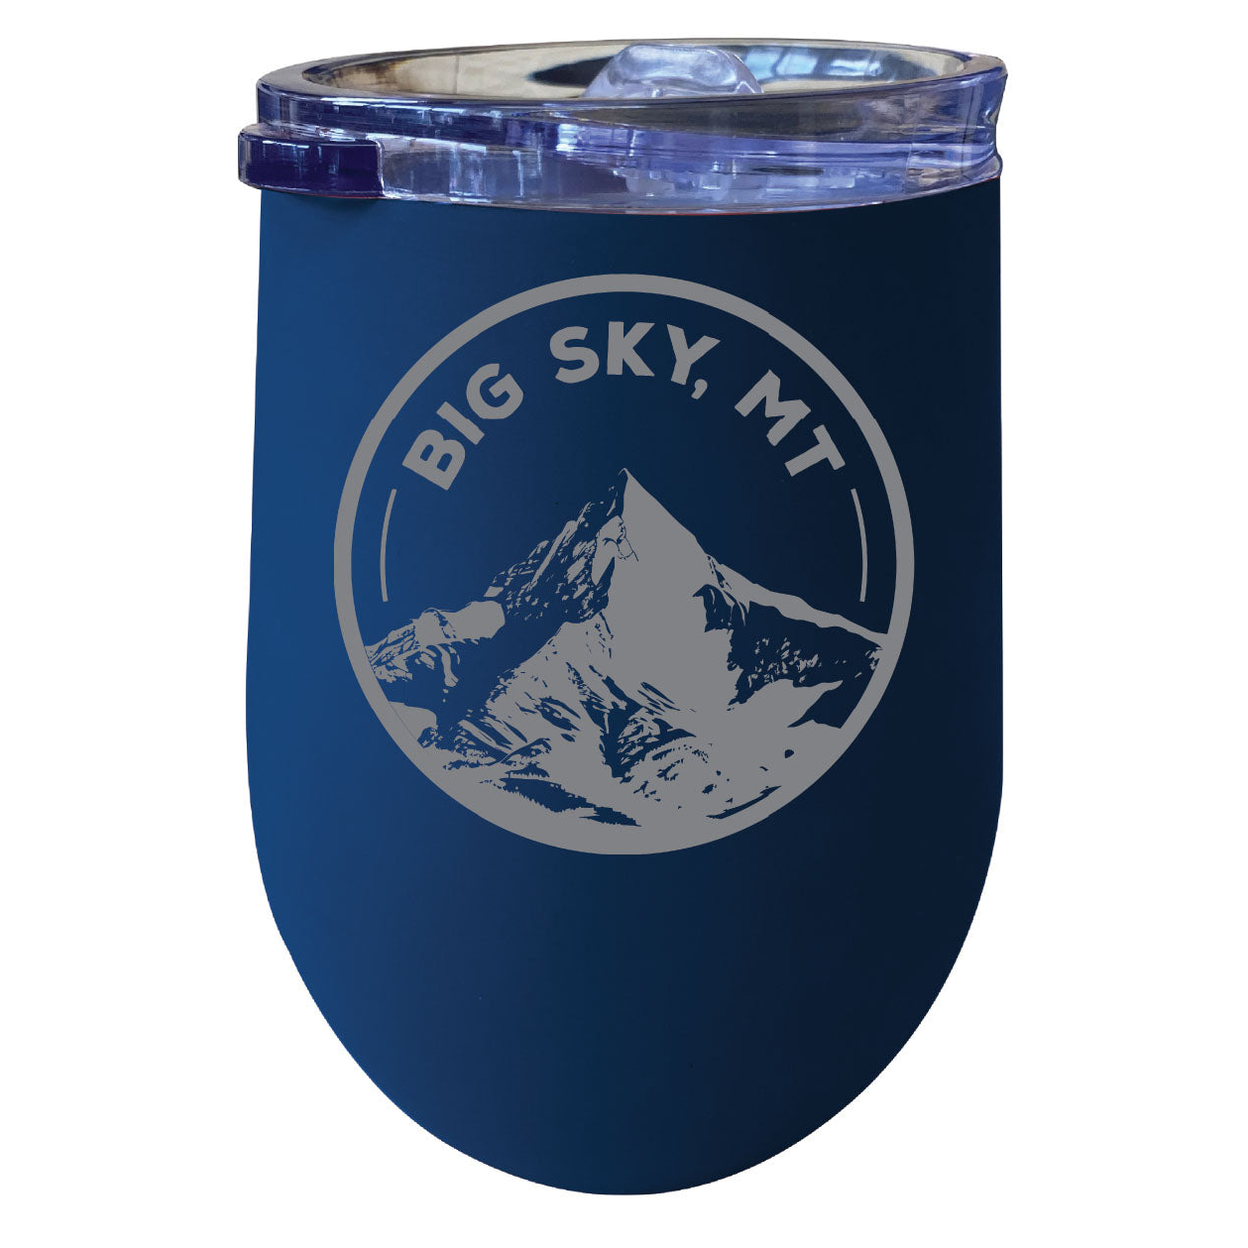 Big Sky Montana Souvenir 12 Oz Engraved Insulated Wine Stainless Steel Tumbler - Navy,,Single Unit